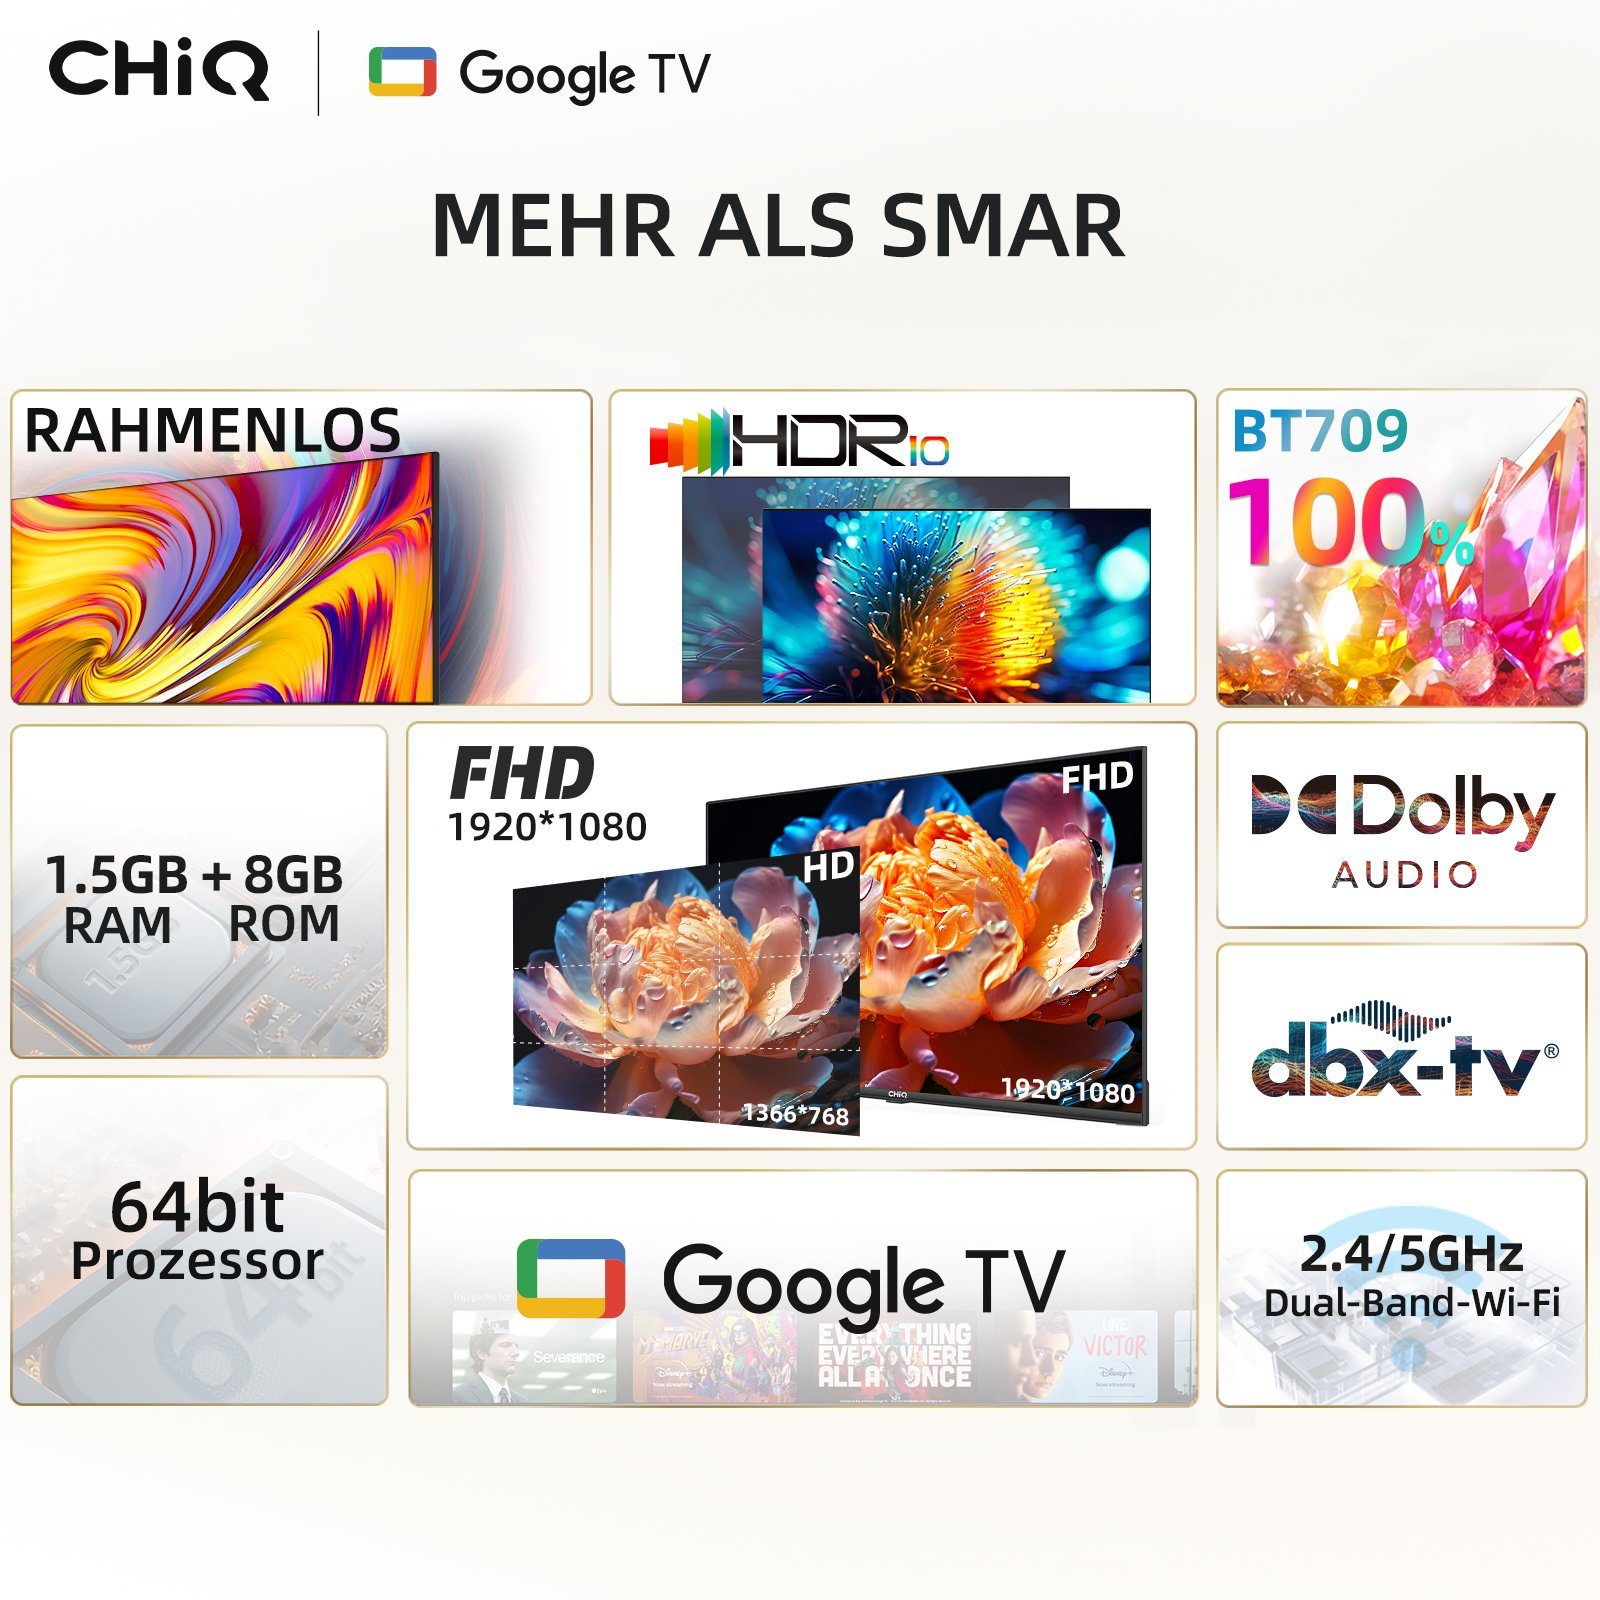 Full Assistant,Chromecast,Youtube,Triple Tuner(DVB-T2/T/C/S2) TV, Smart-TV, CHiQ L40H7G (100,00 Zoll, LED-Fernseher Google Google HD, cm/40